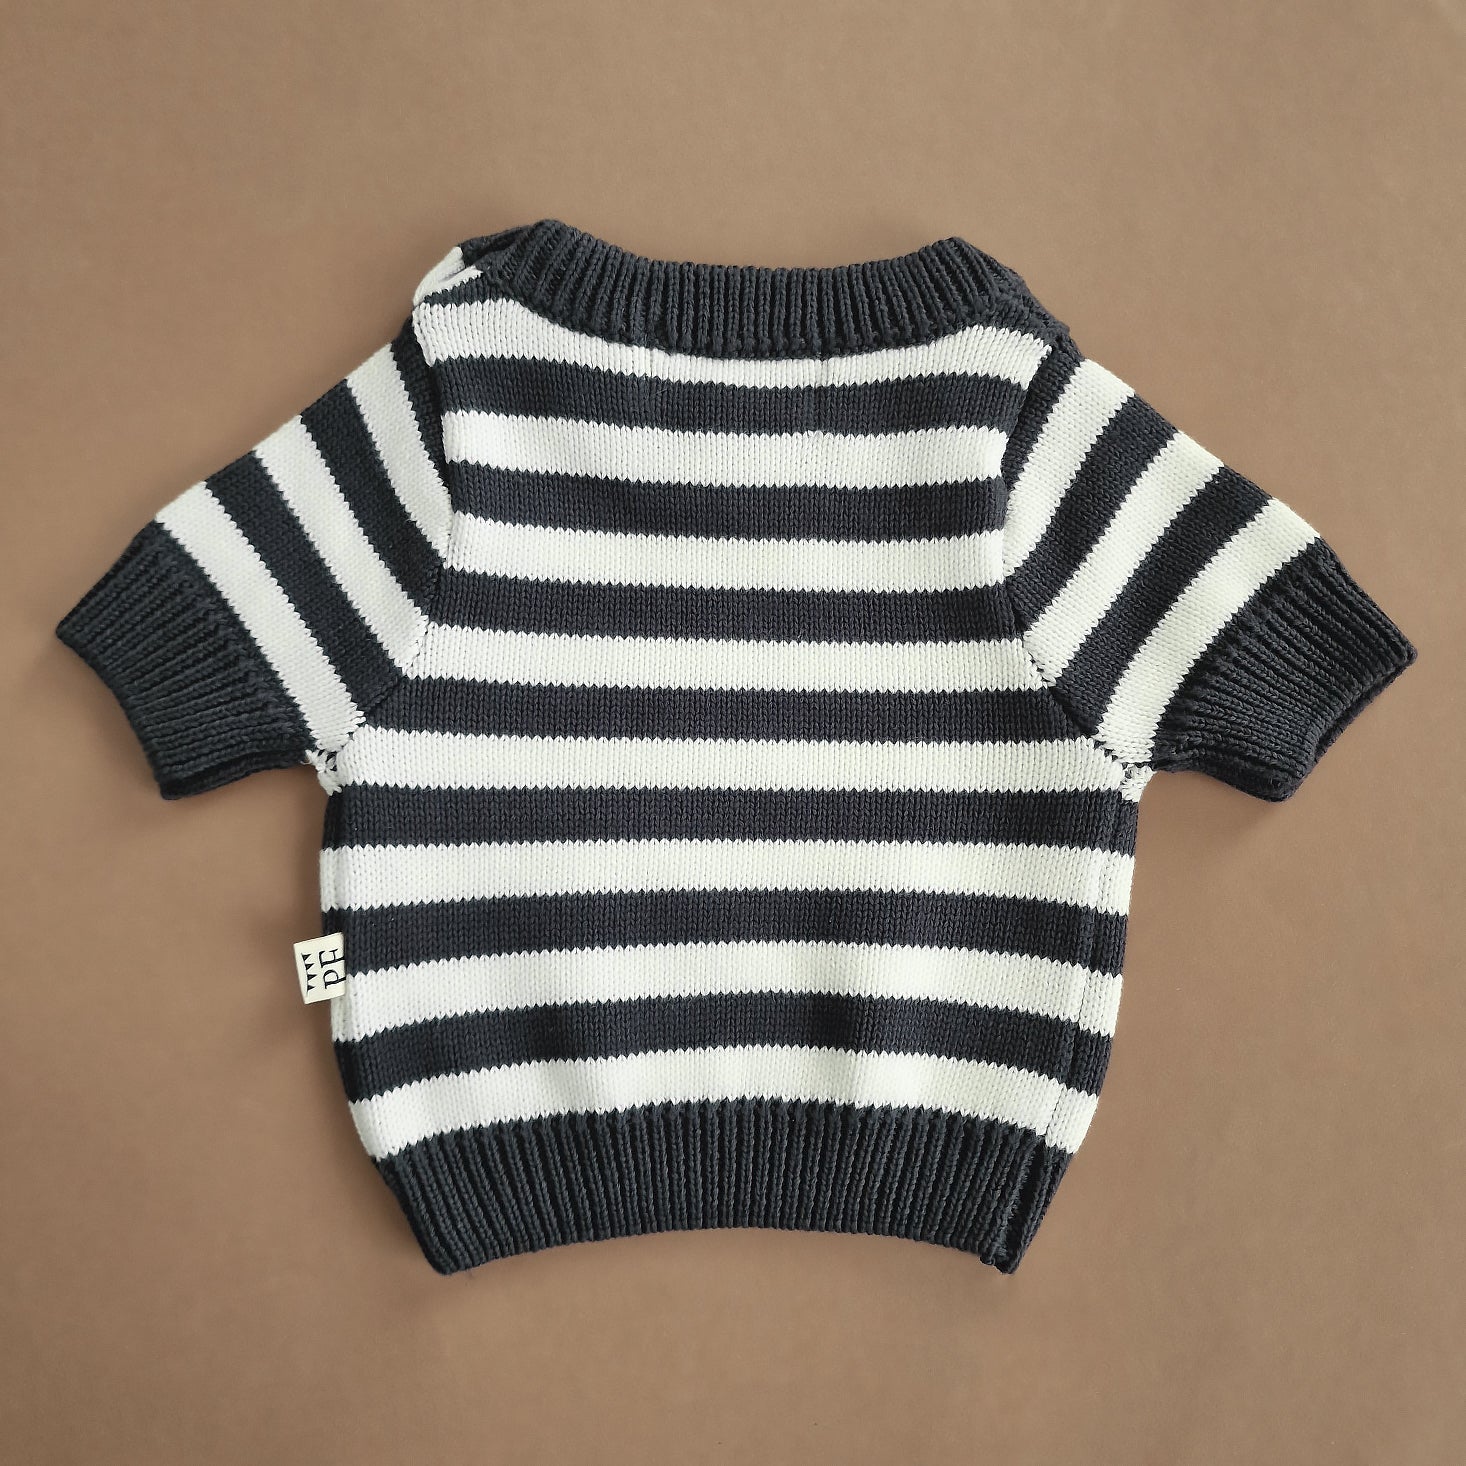 Striped Sweater - Short Sleeve - Cotton - Graphite & Ivory - Petit Filippe